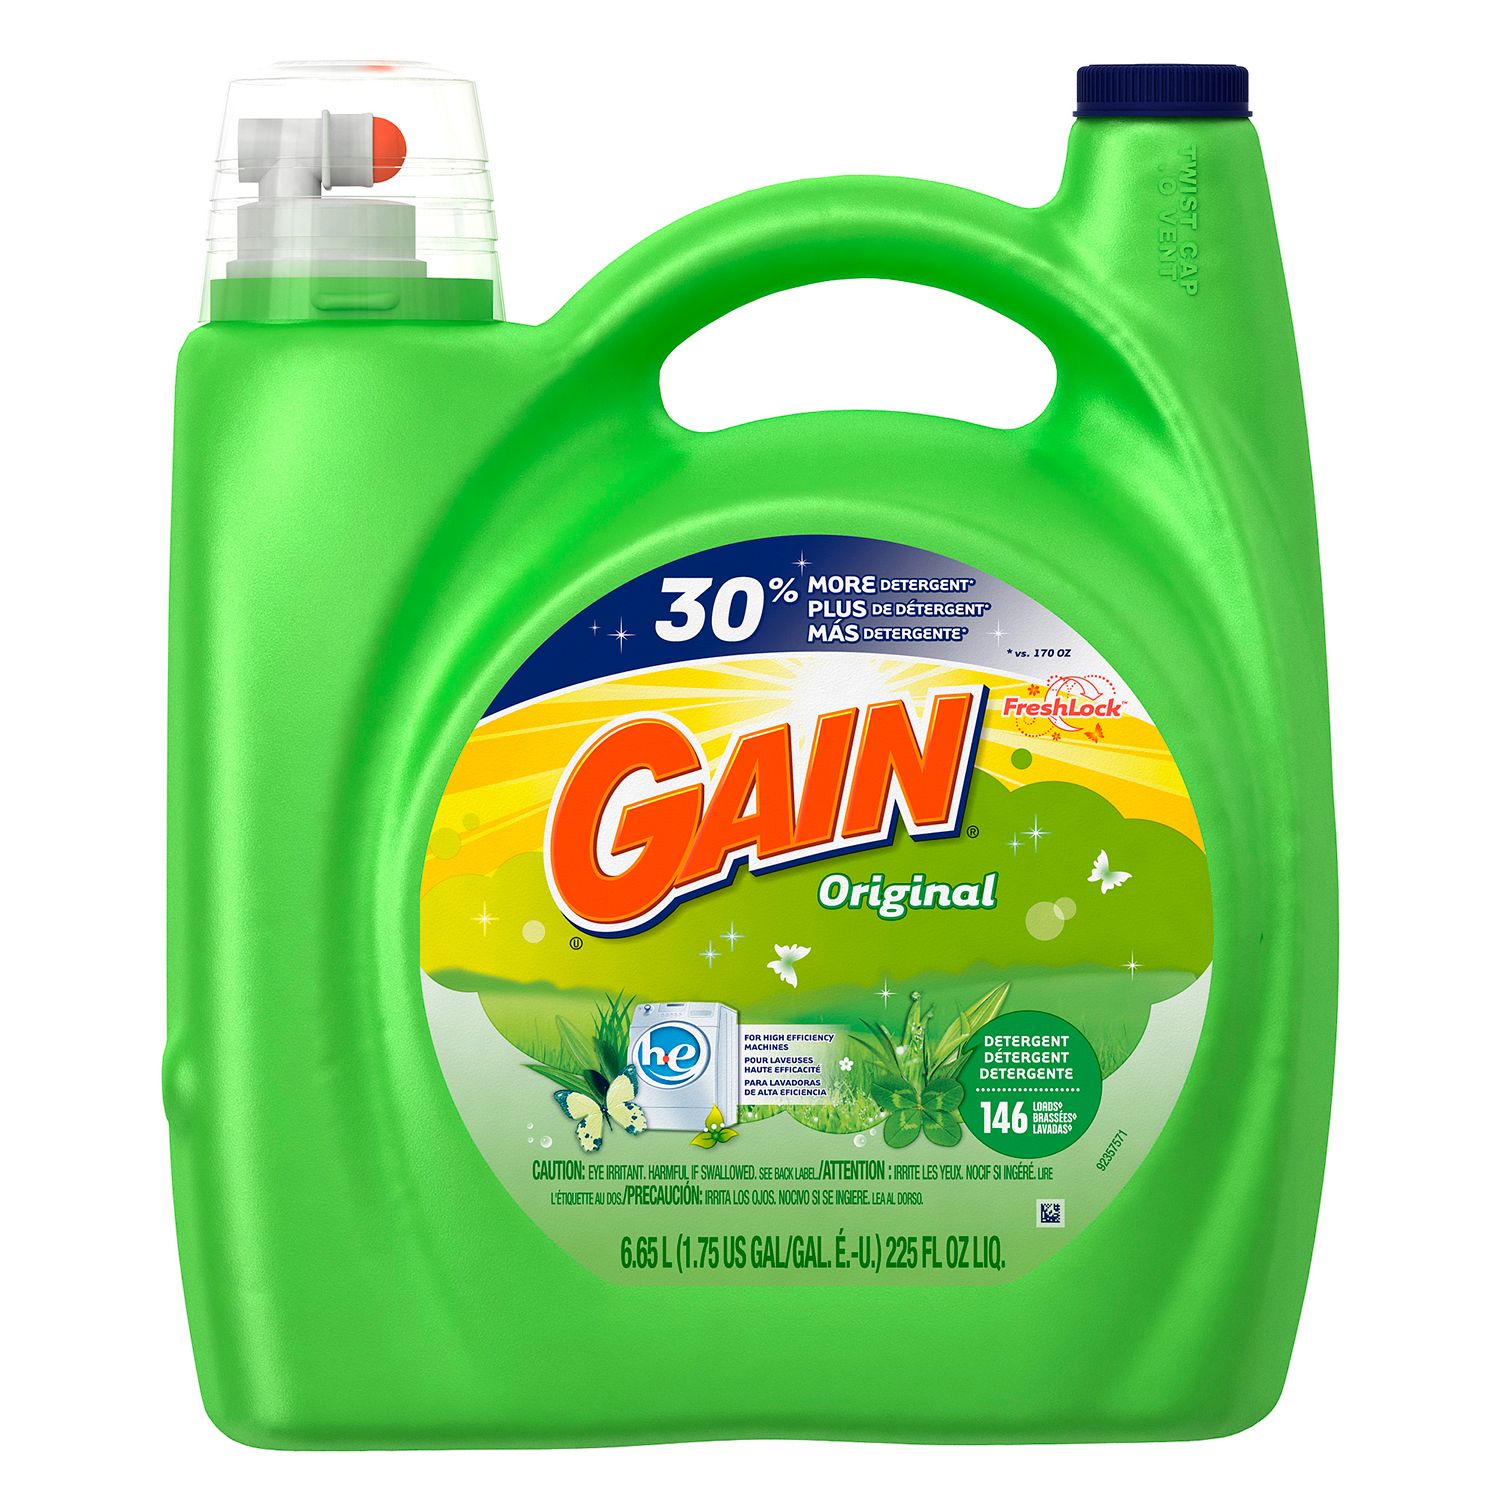 Gain HE Original Liquid
Laundry Detergent - 225 oz. -
146 loads